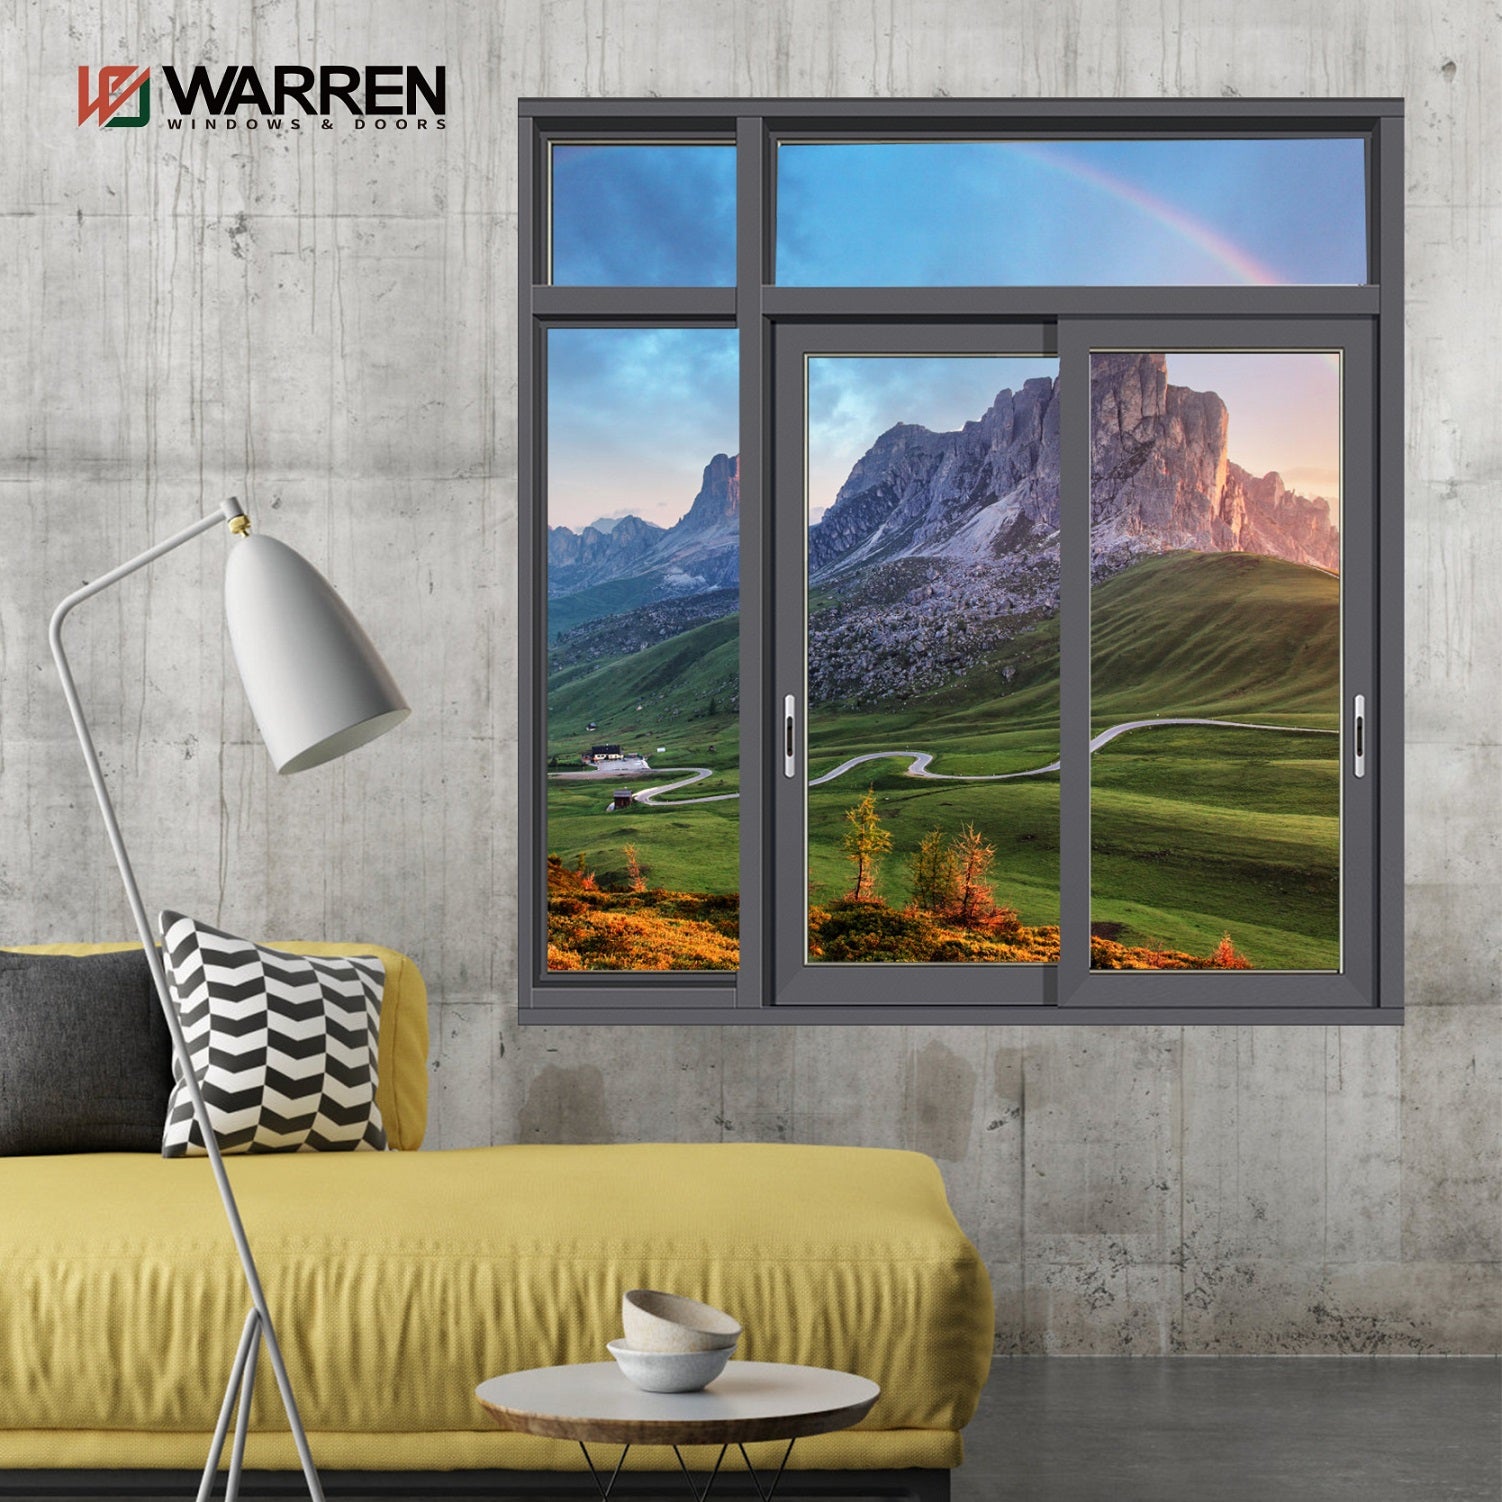 Warren 6 foot tall window latest double glazed aluminum sliding window design factory price